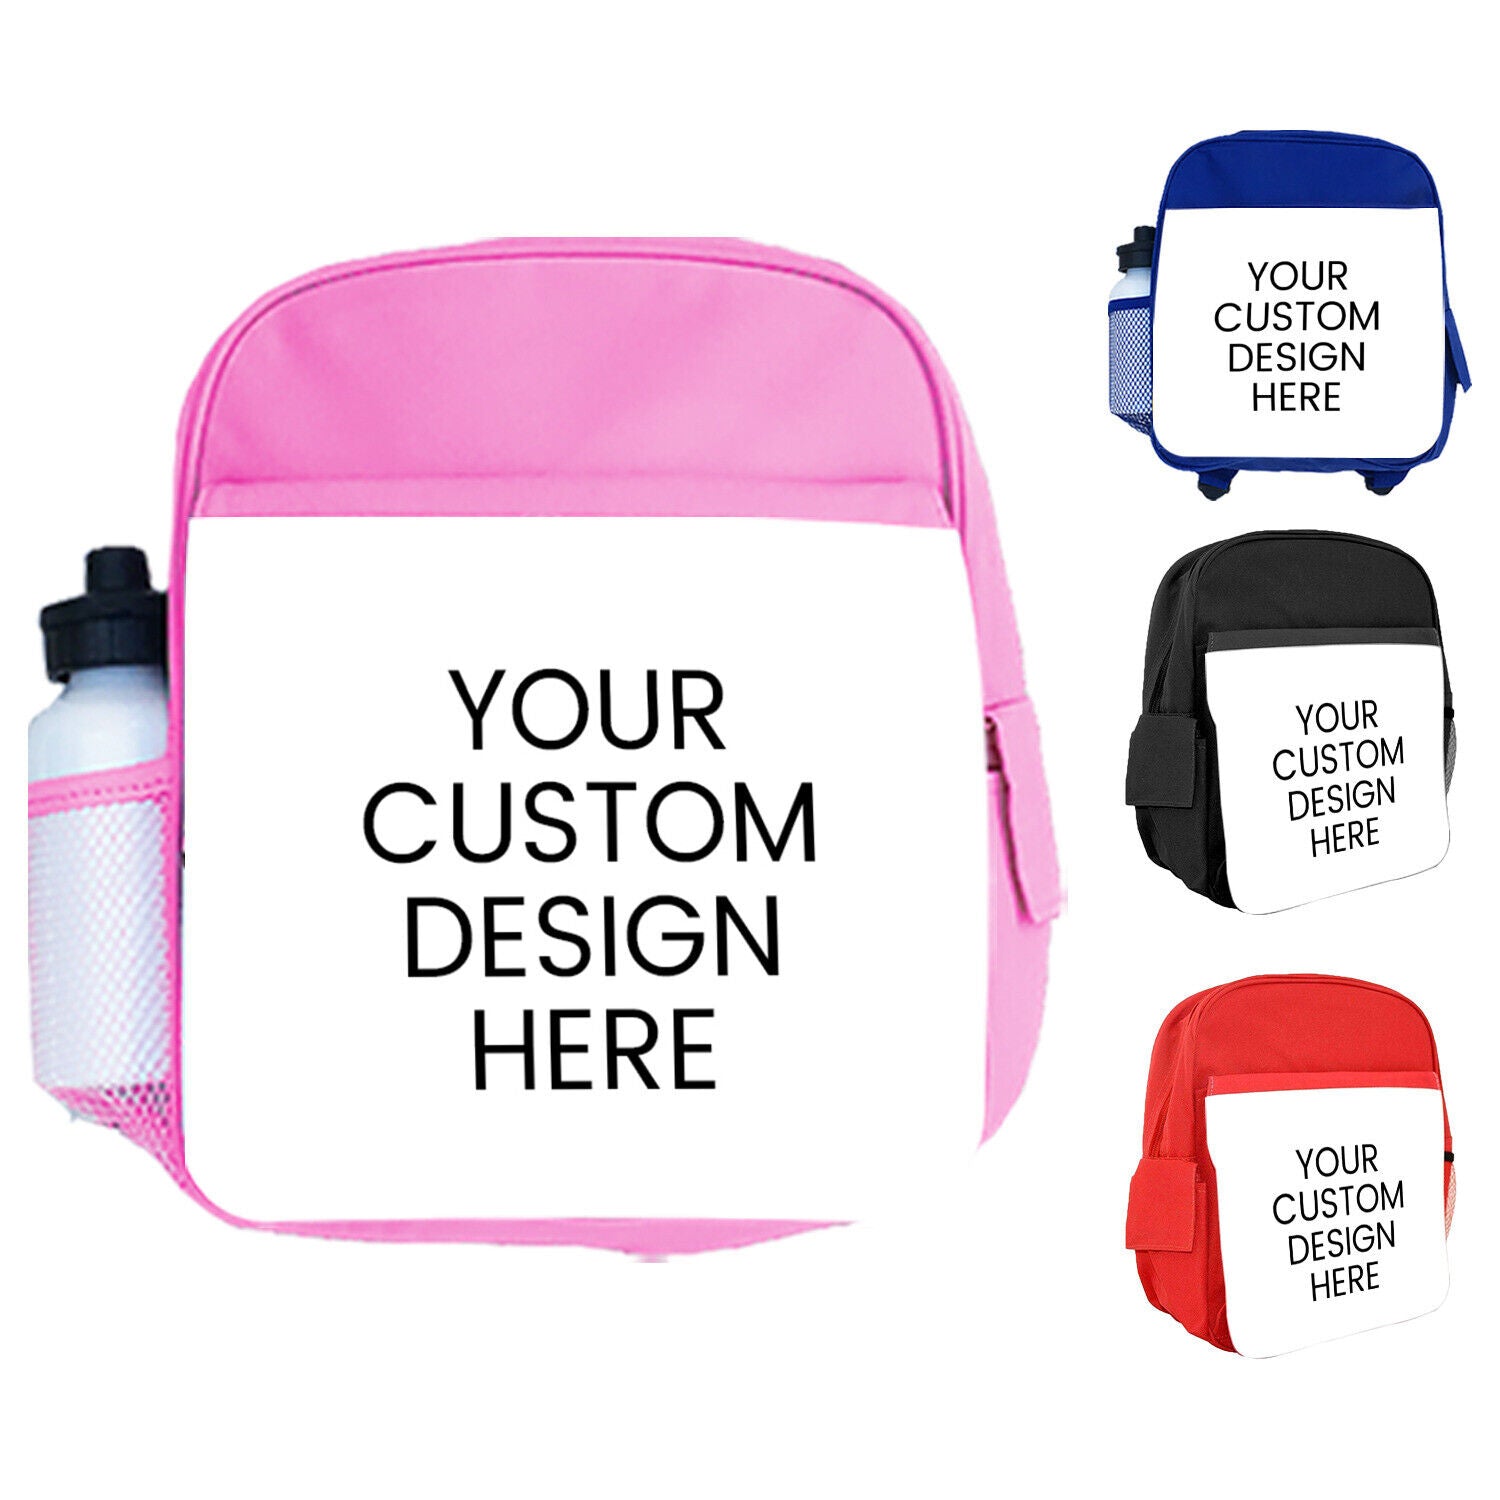 Personalised Kids Backpack Any Name Car Design Boys Girls Children School Bag 9